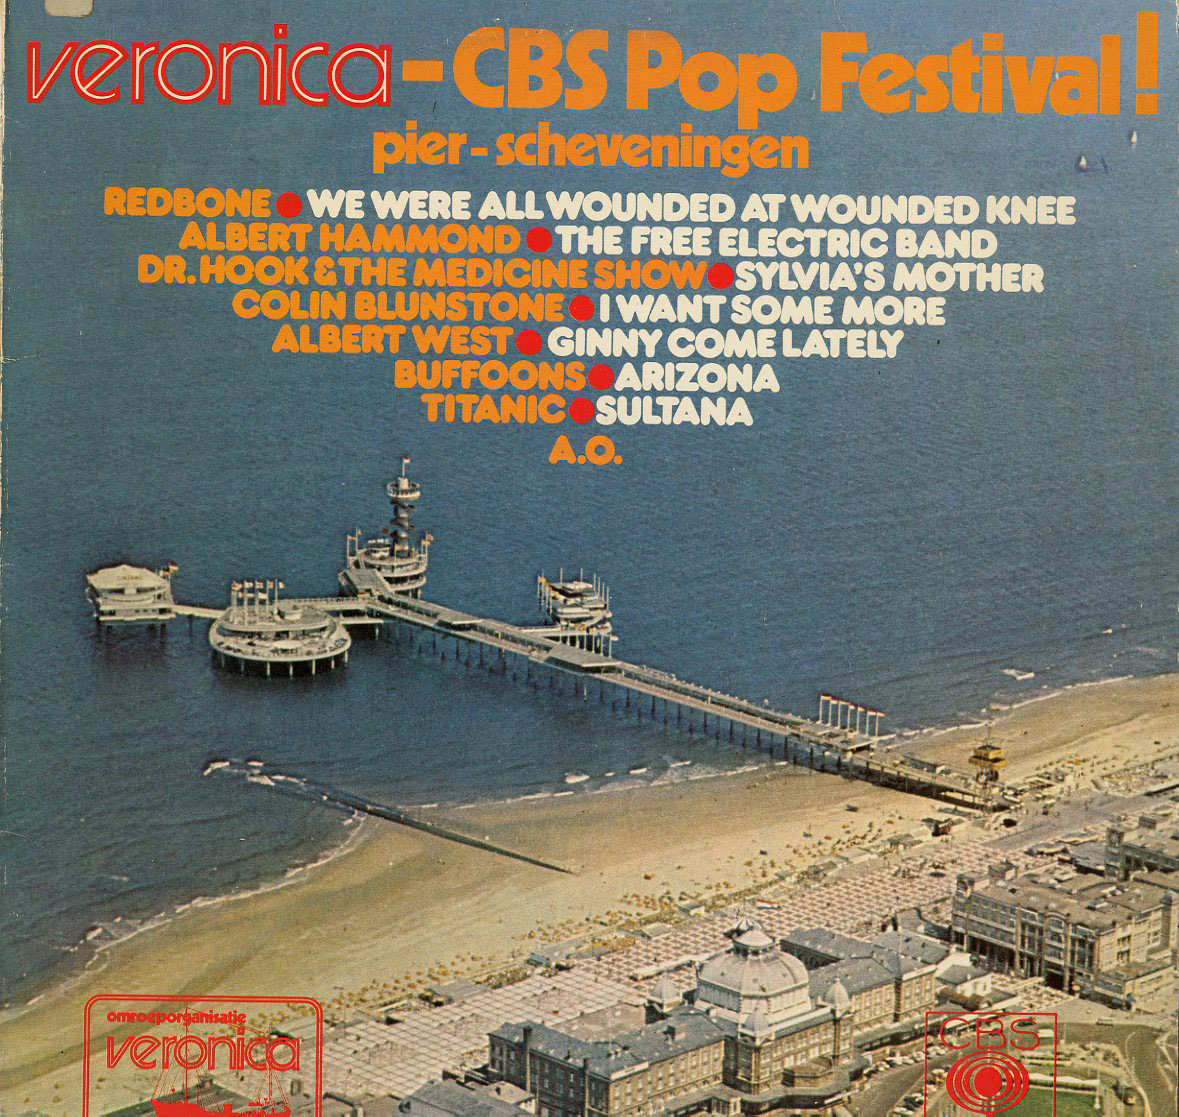 Albumcover Various Artists of the 70s - Veronica CBS Pop Festival Pier Scheveningen